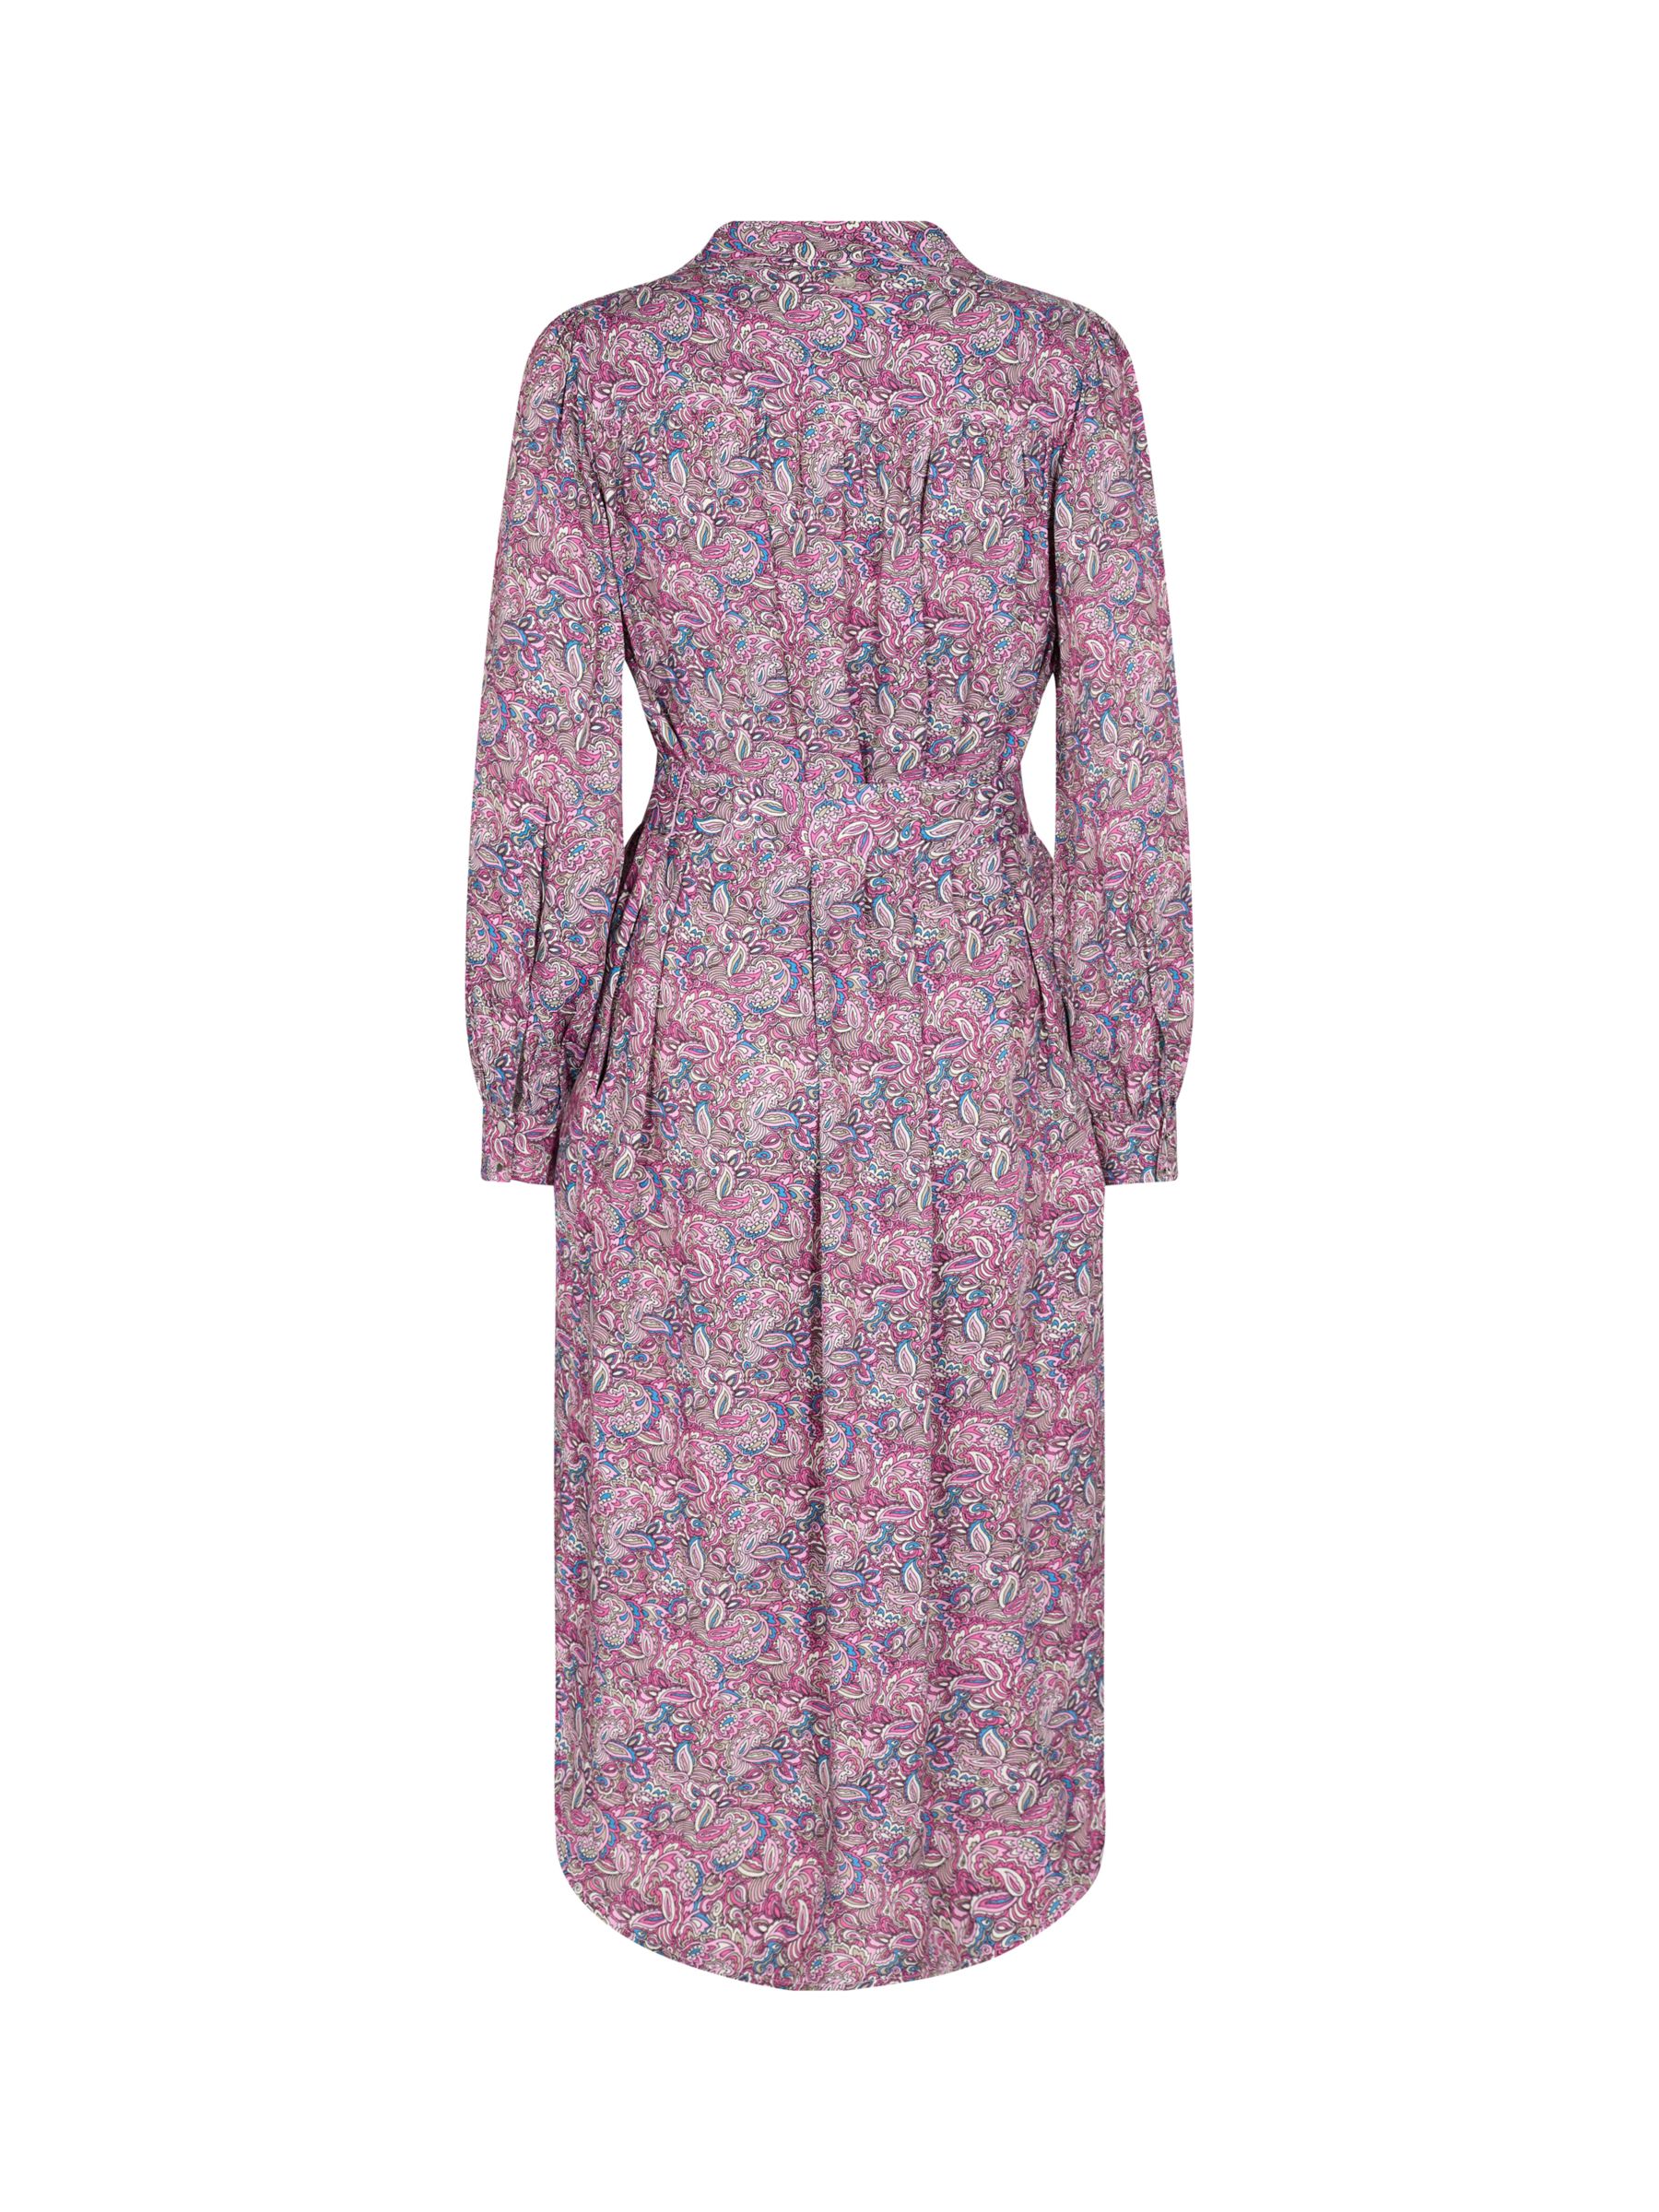 MOS MOSH Aldo Flower Paisley Print Dress, Lilac Sachet, XS